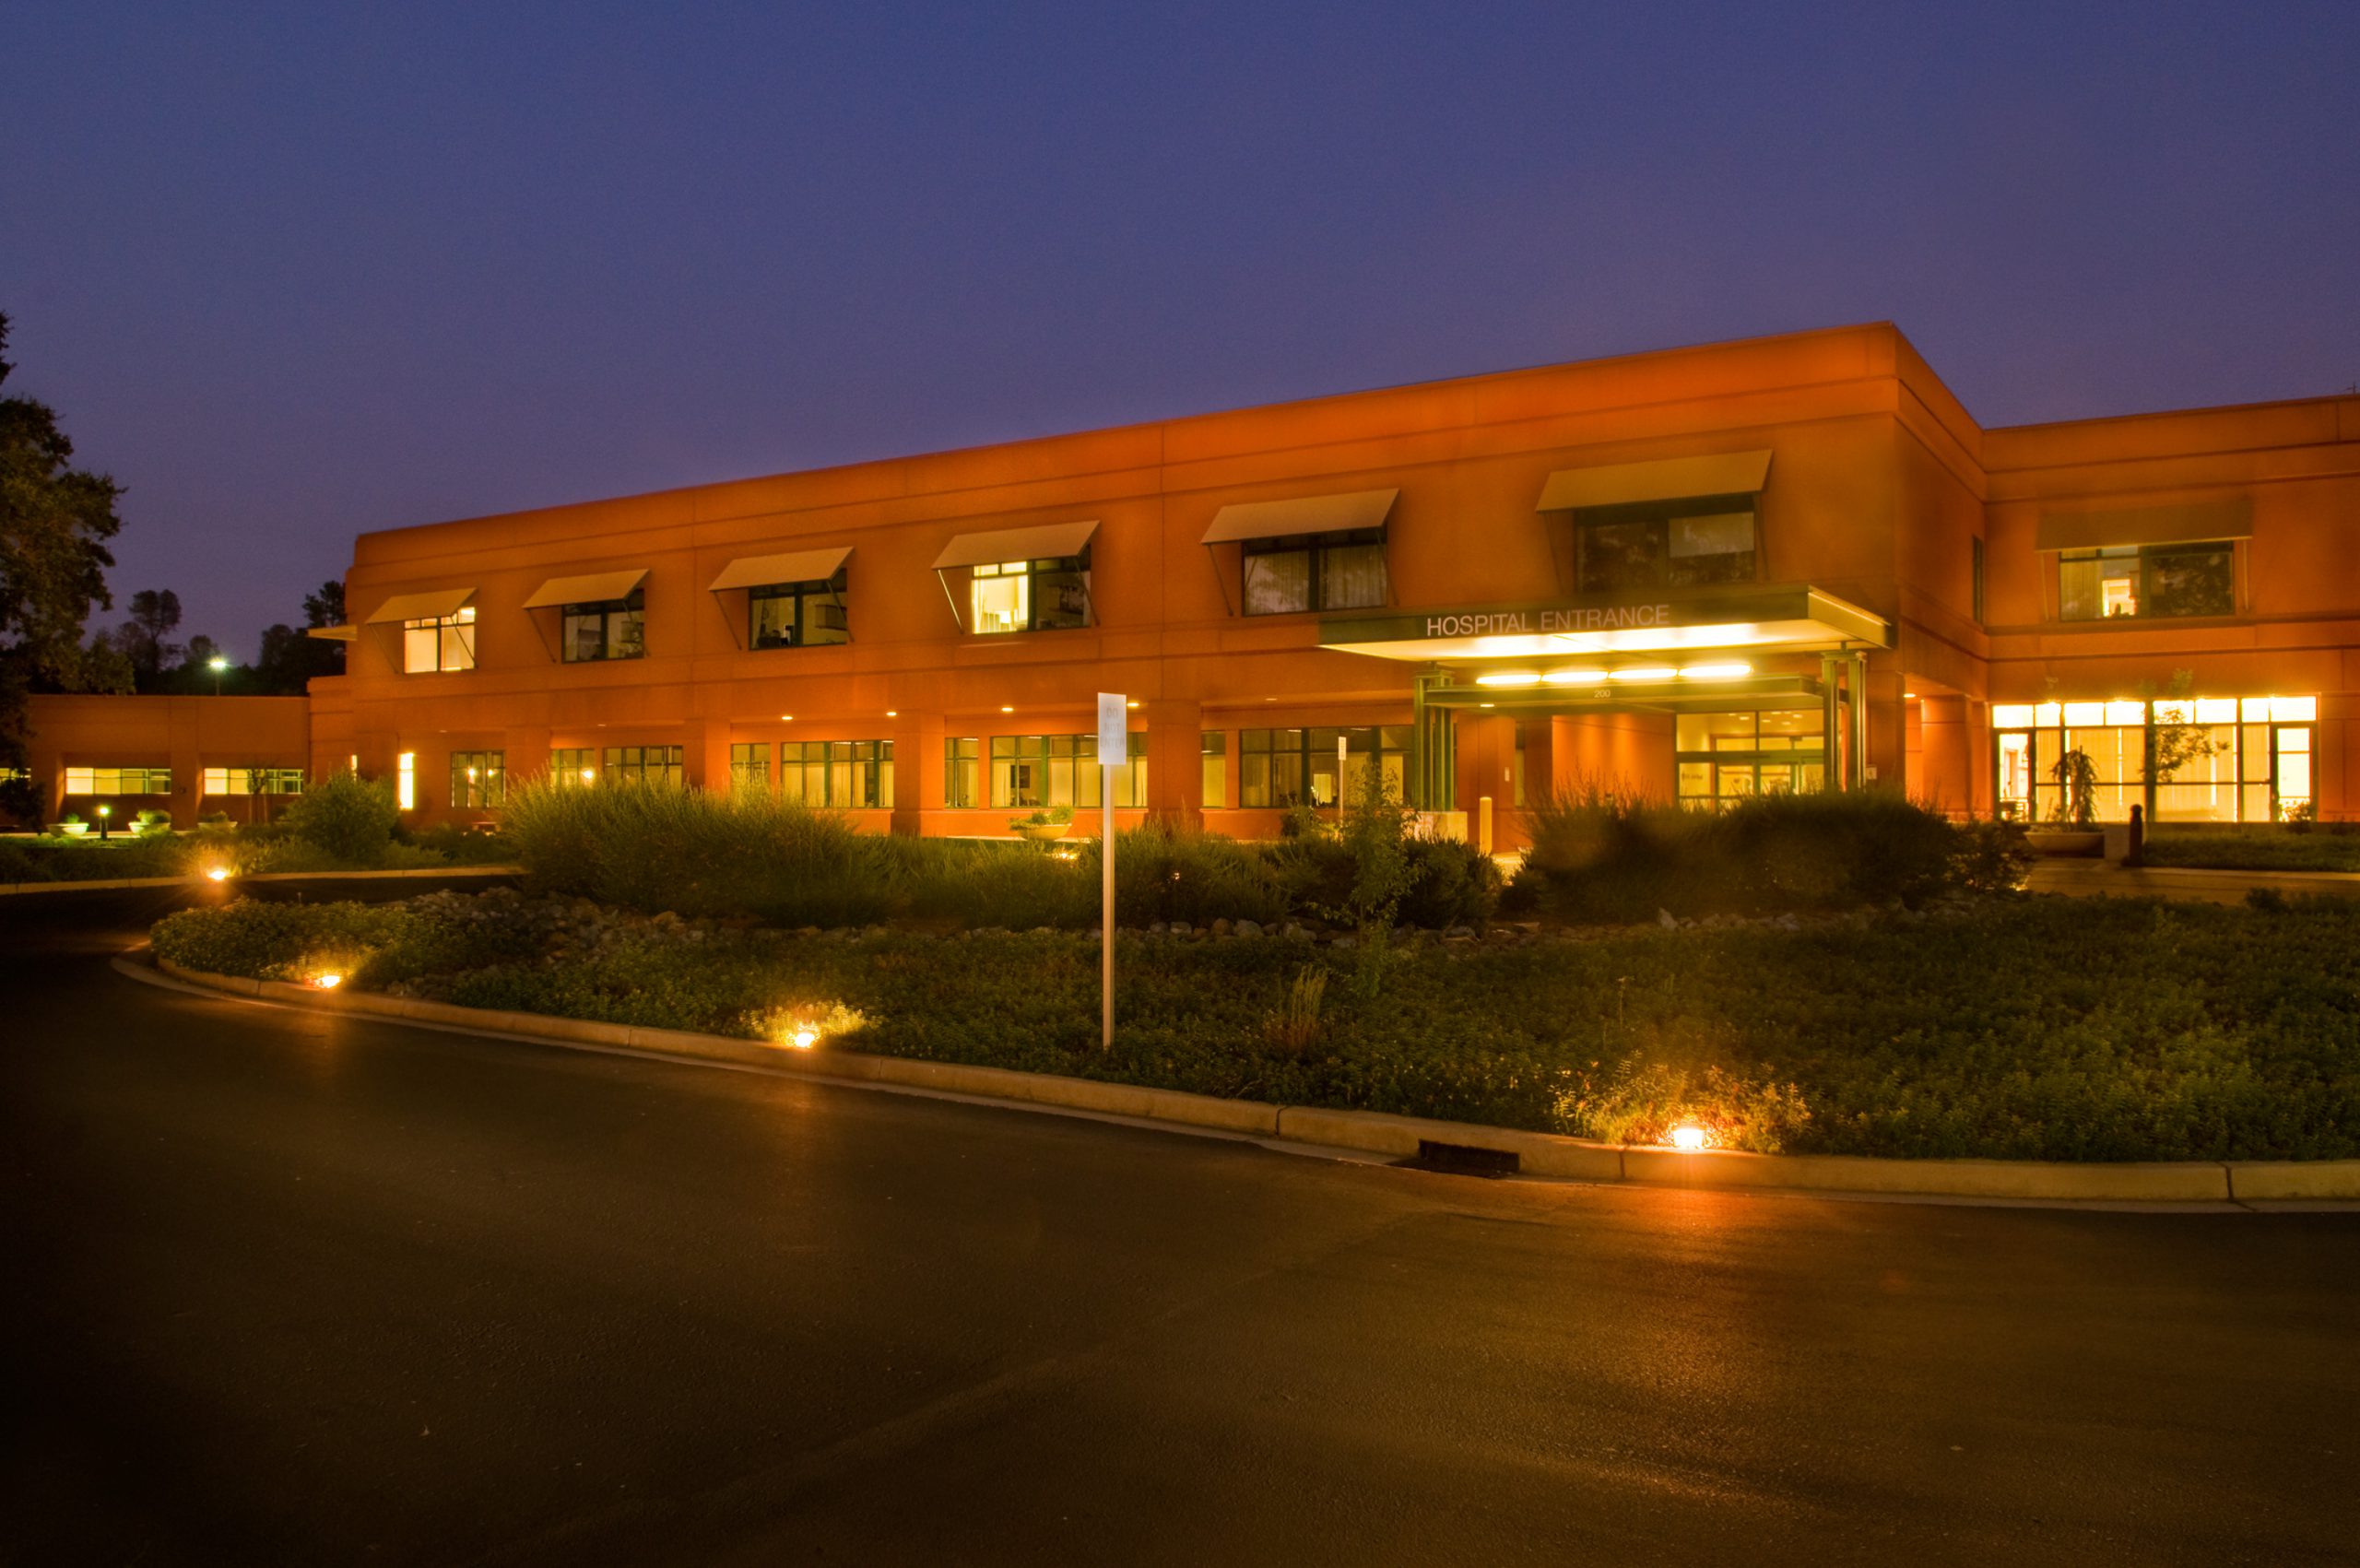 Sutter Amador Hospital at night